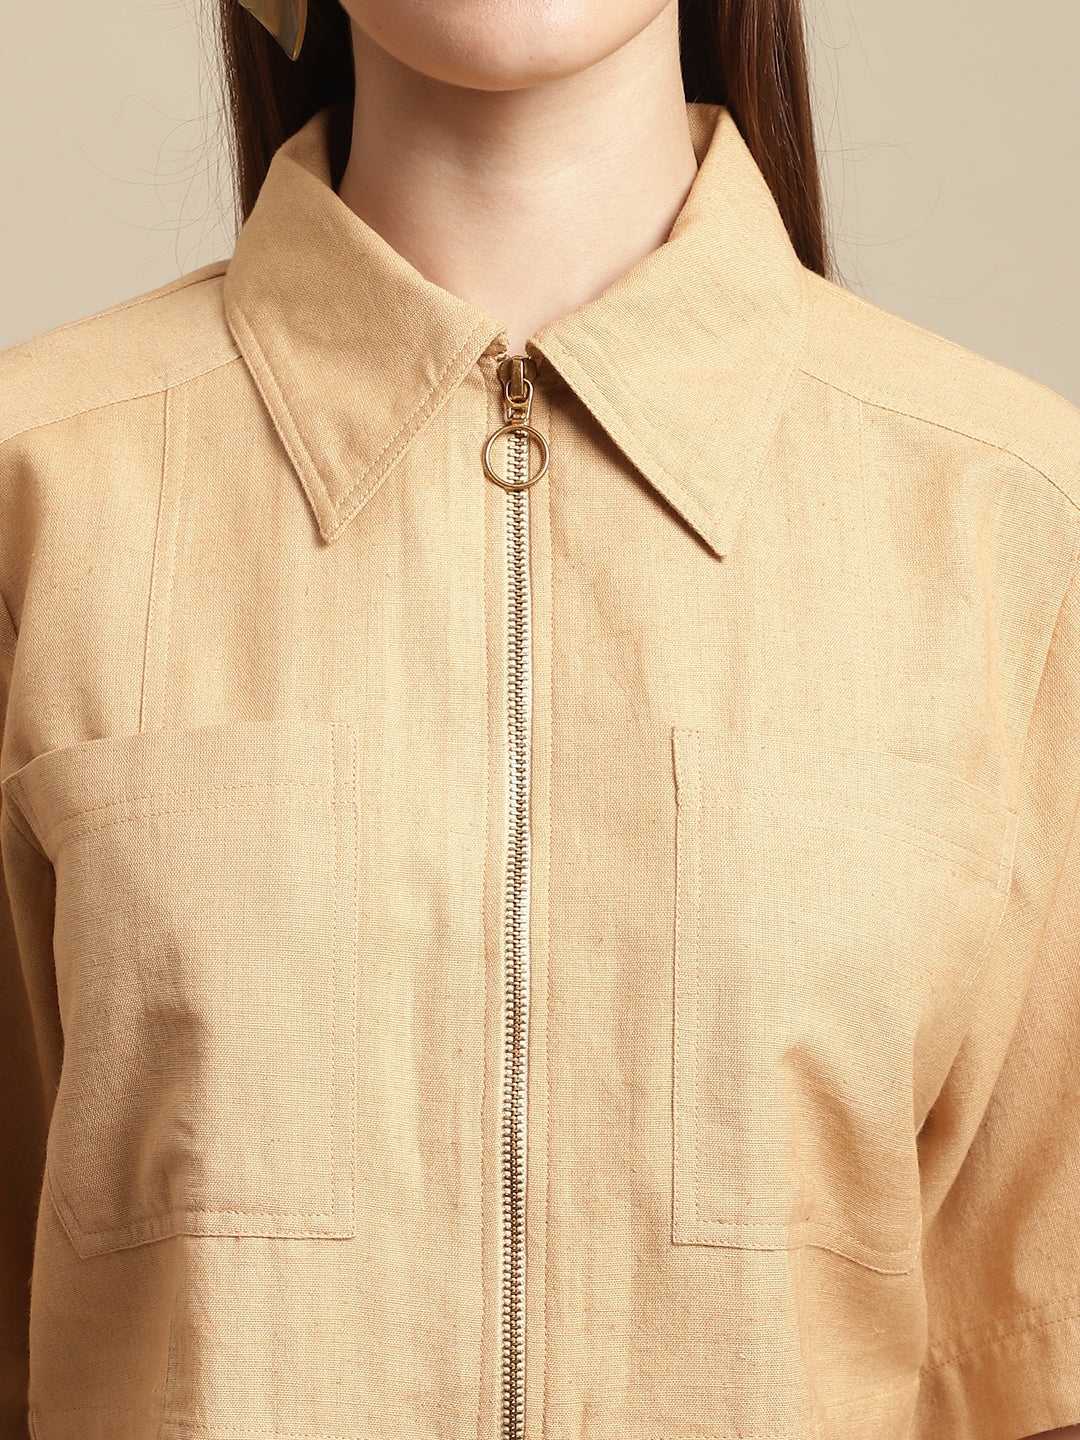 Blanc9 Mustard Crop Shirt With Long Trouser Co-Ord Set-B9ST101